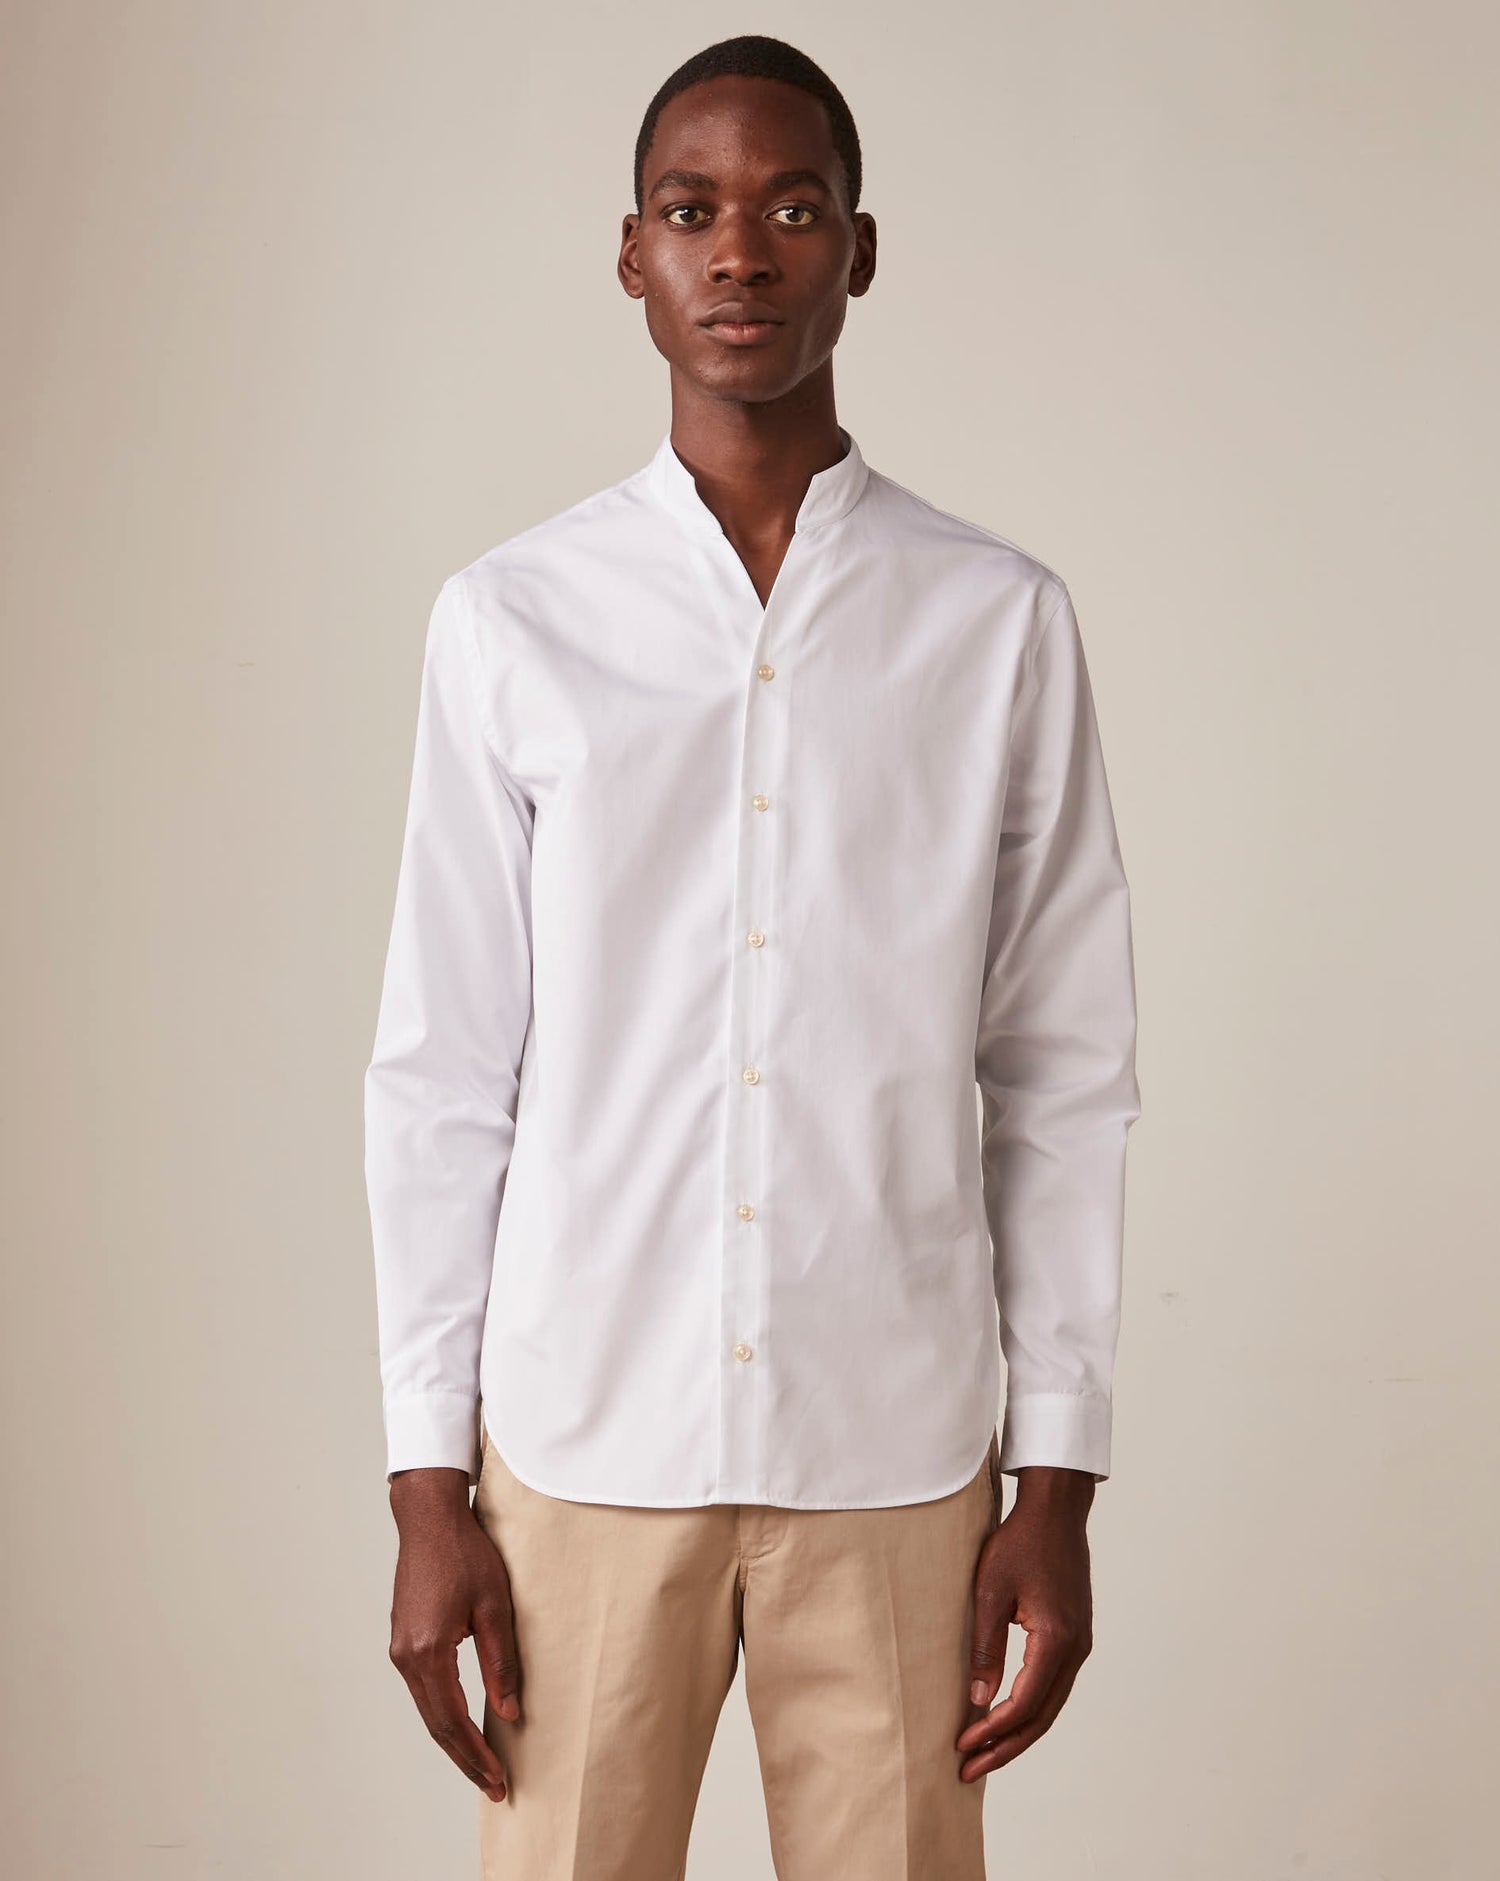 White Carl shirt - Poplin - Open straight Collar#3